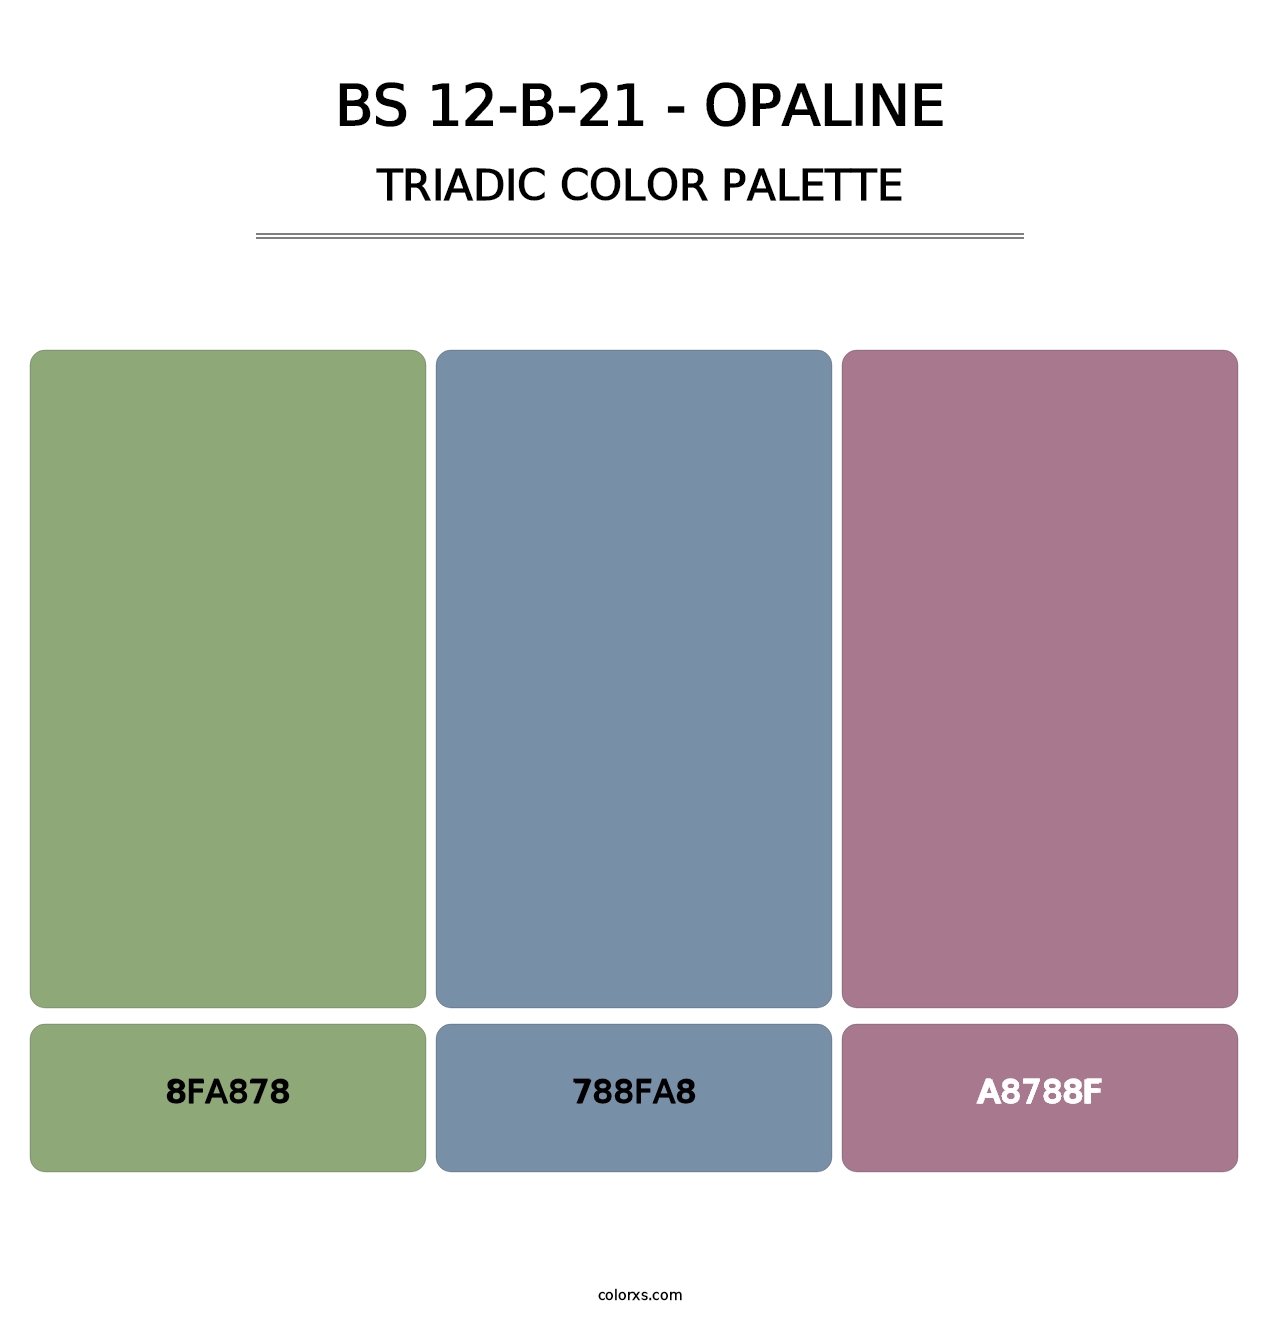 BS 12-B-21 - Opaline - Triadic Color Palette